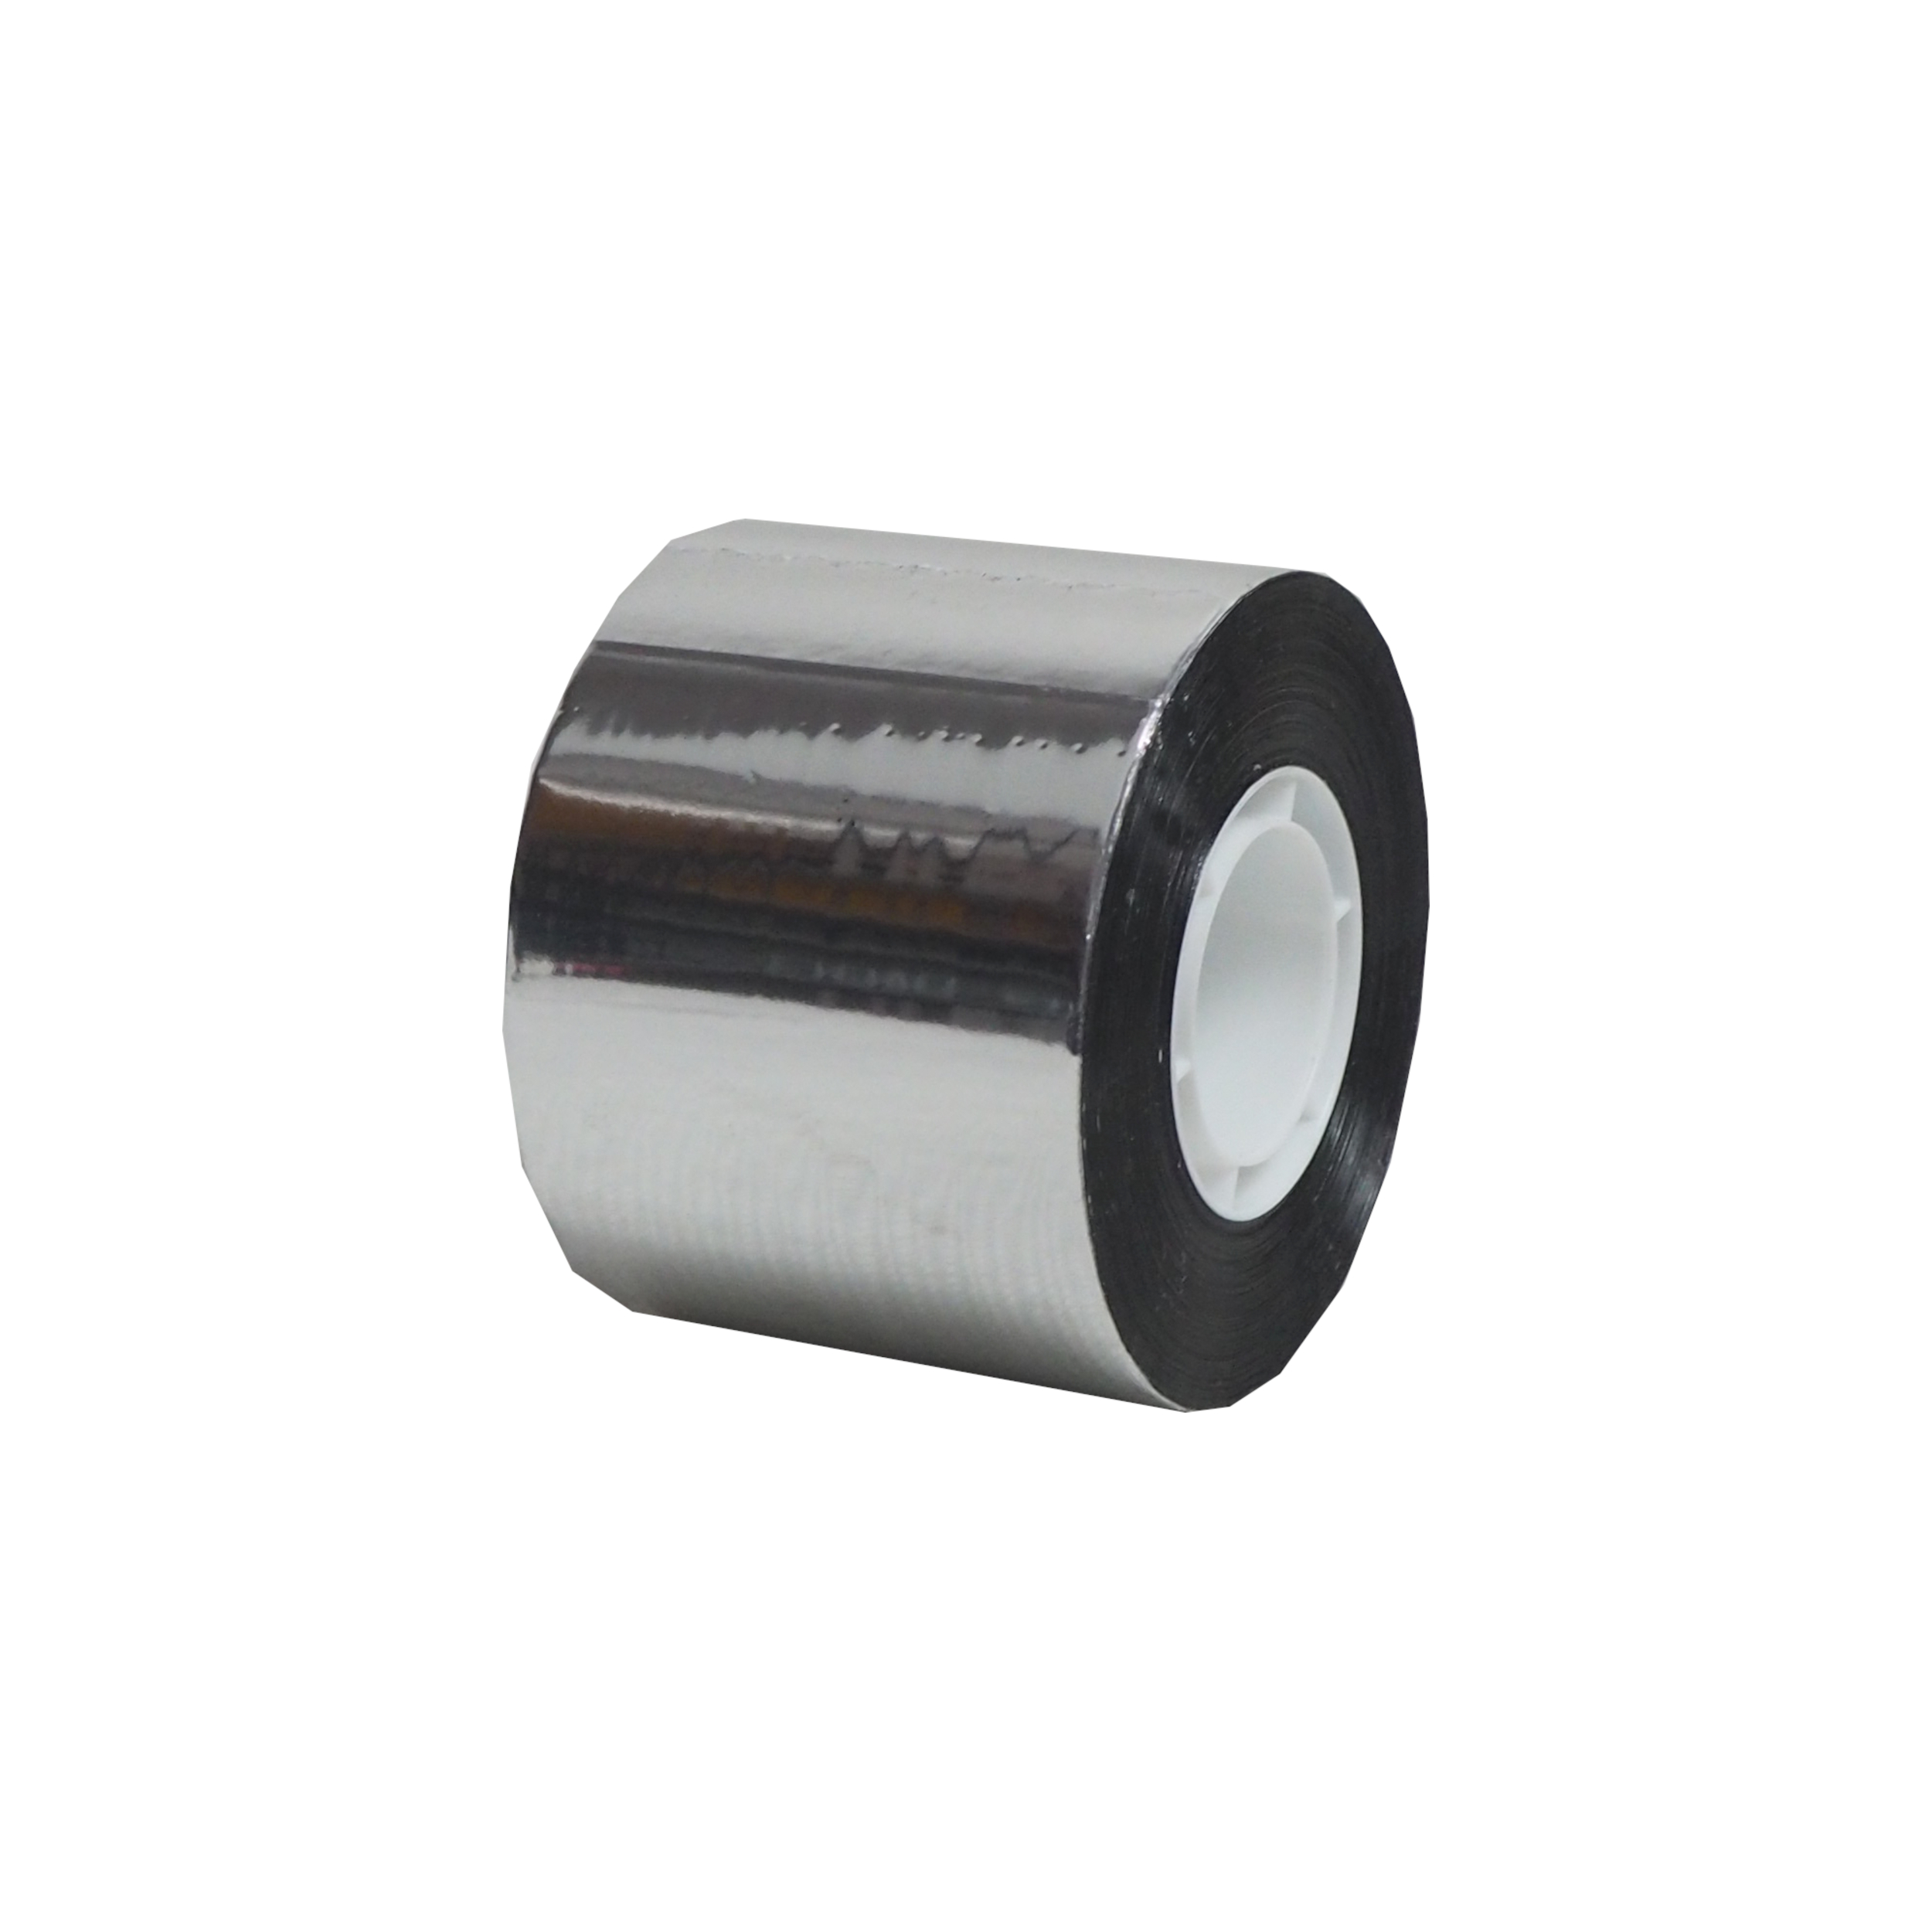 páska Alu tape PP, polypropylen napařený hliníkem, 50 mm x 50 m 0.13 Kg TOP Sklad4 701024 237